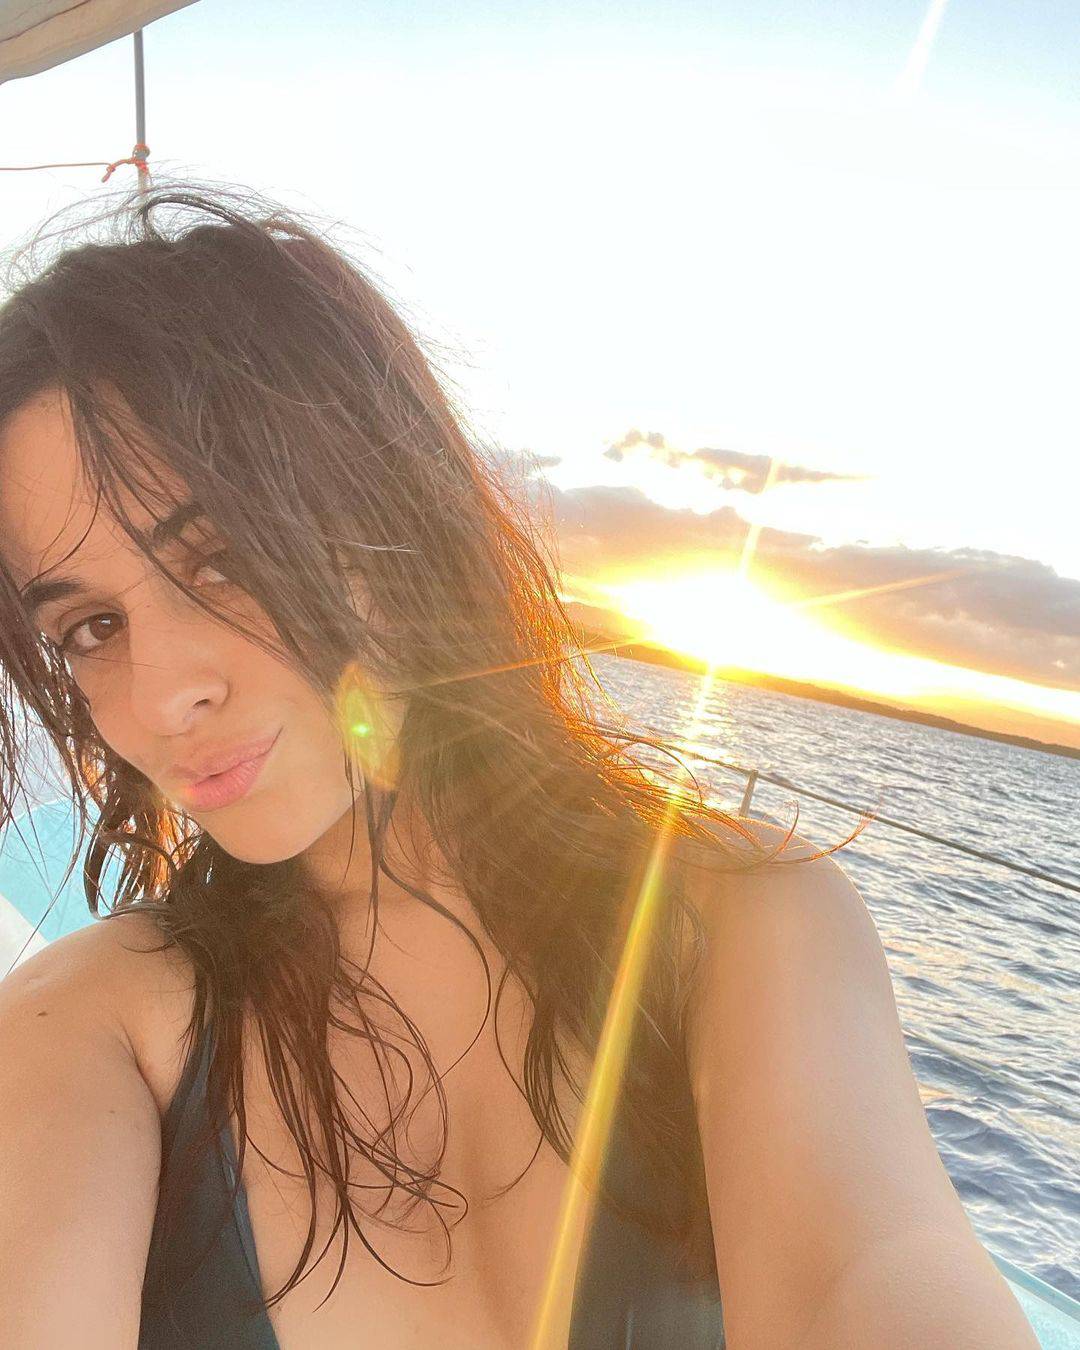 Camila Cabello pokazala obline na odmoru, a fanove je zbunila jer se našla s bivšim dečkom